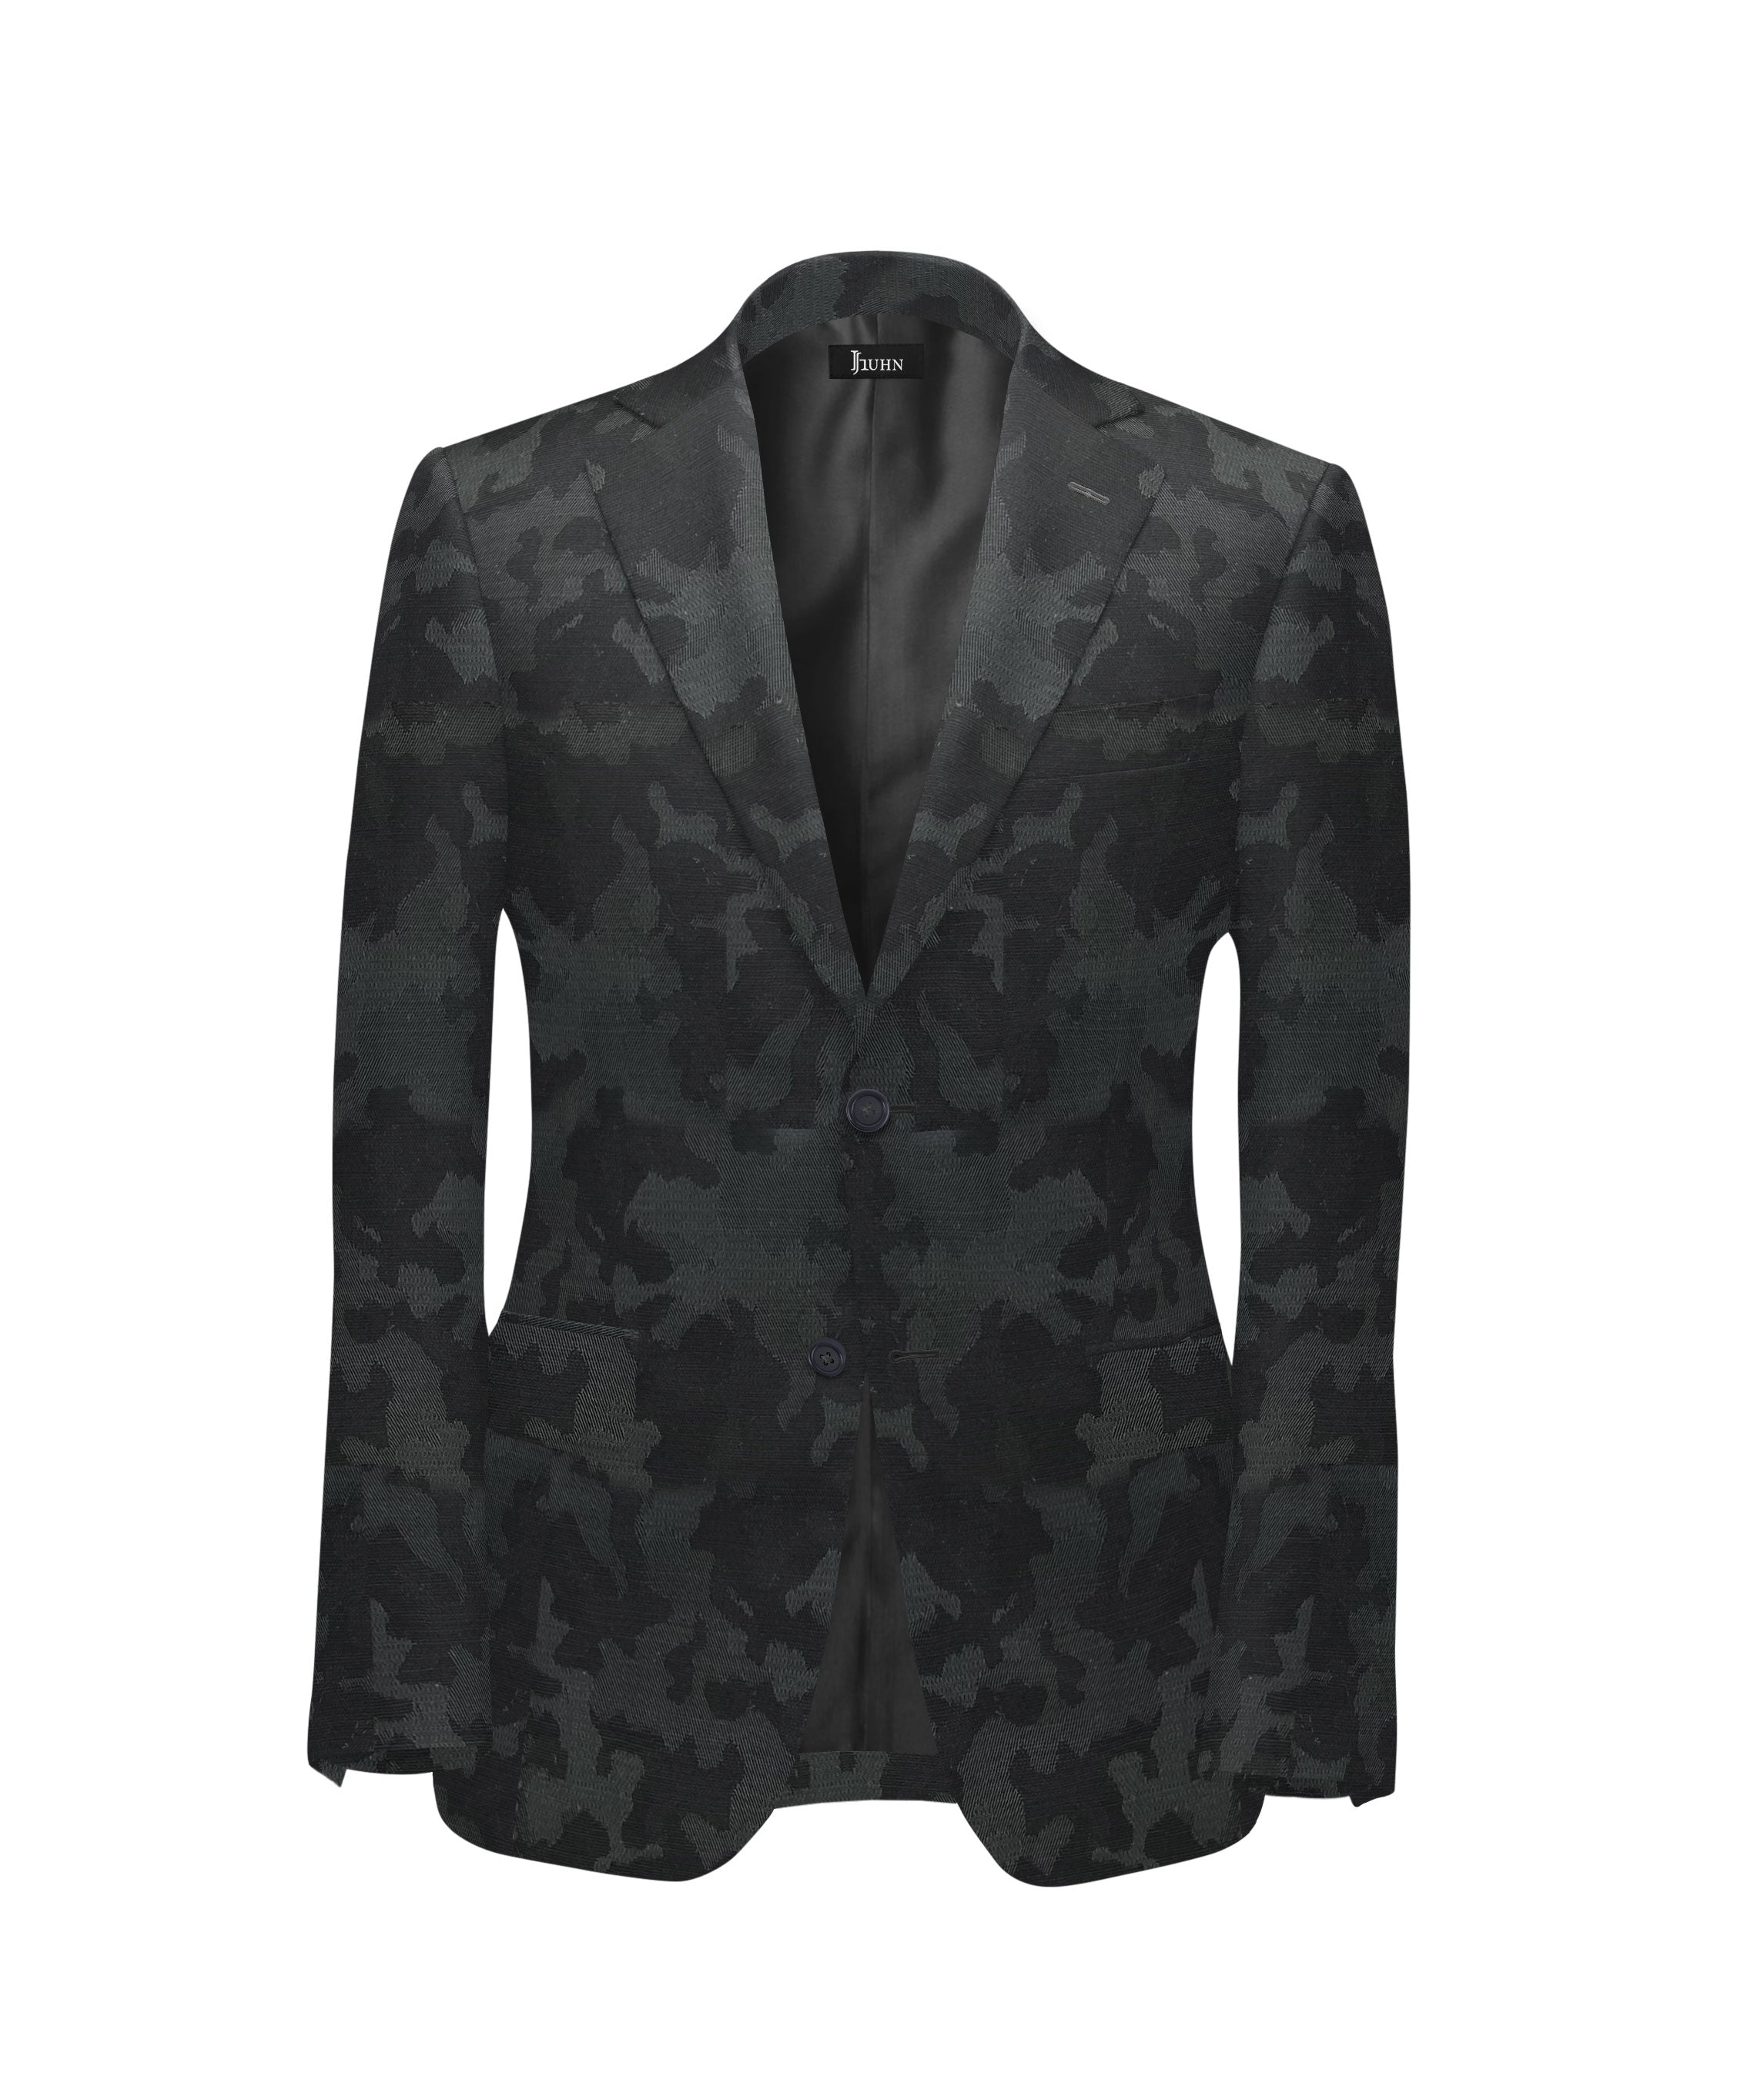 Men's Evening Jacket - The Black Camo